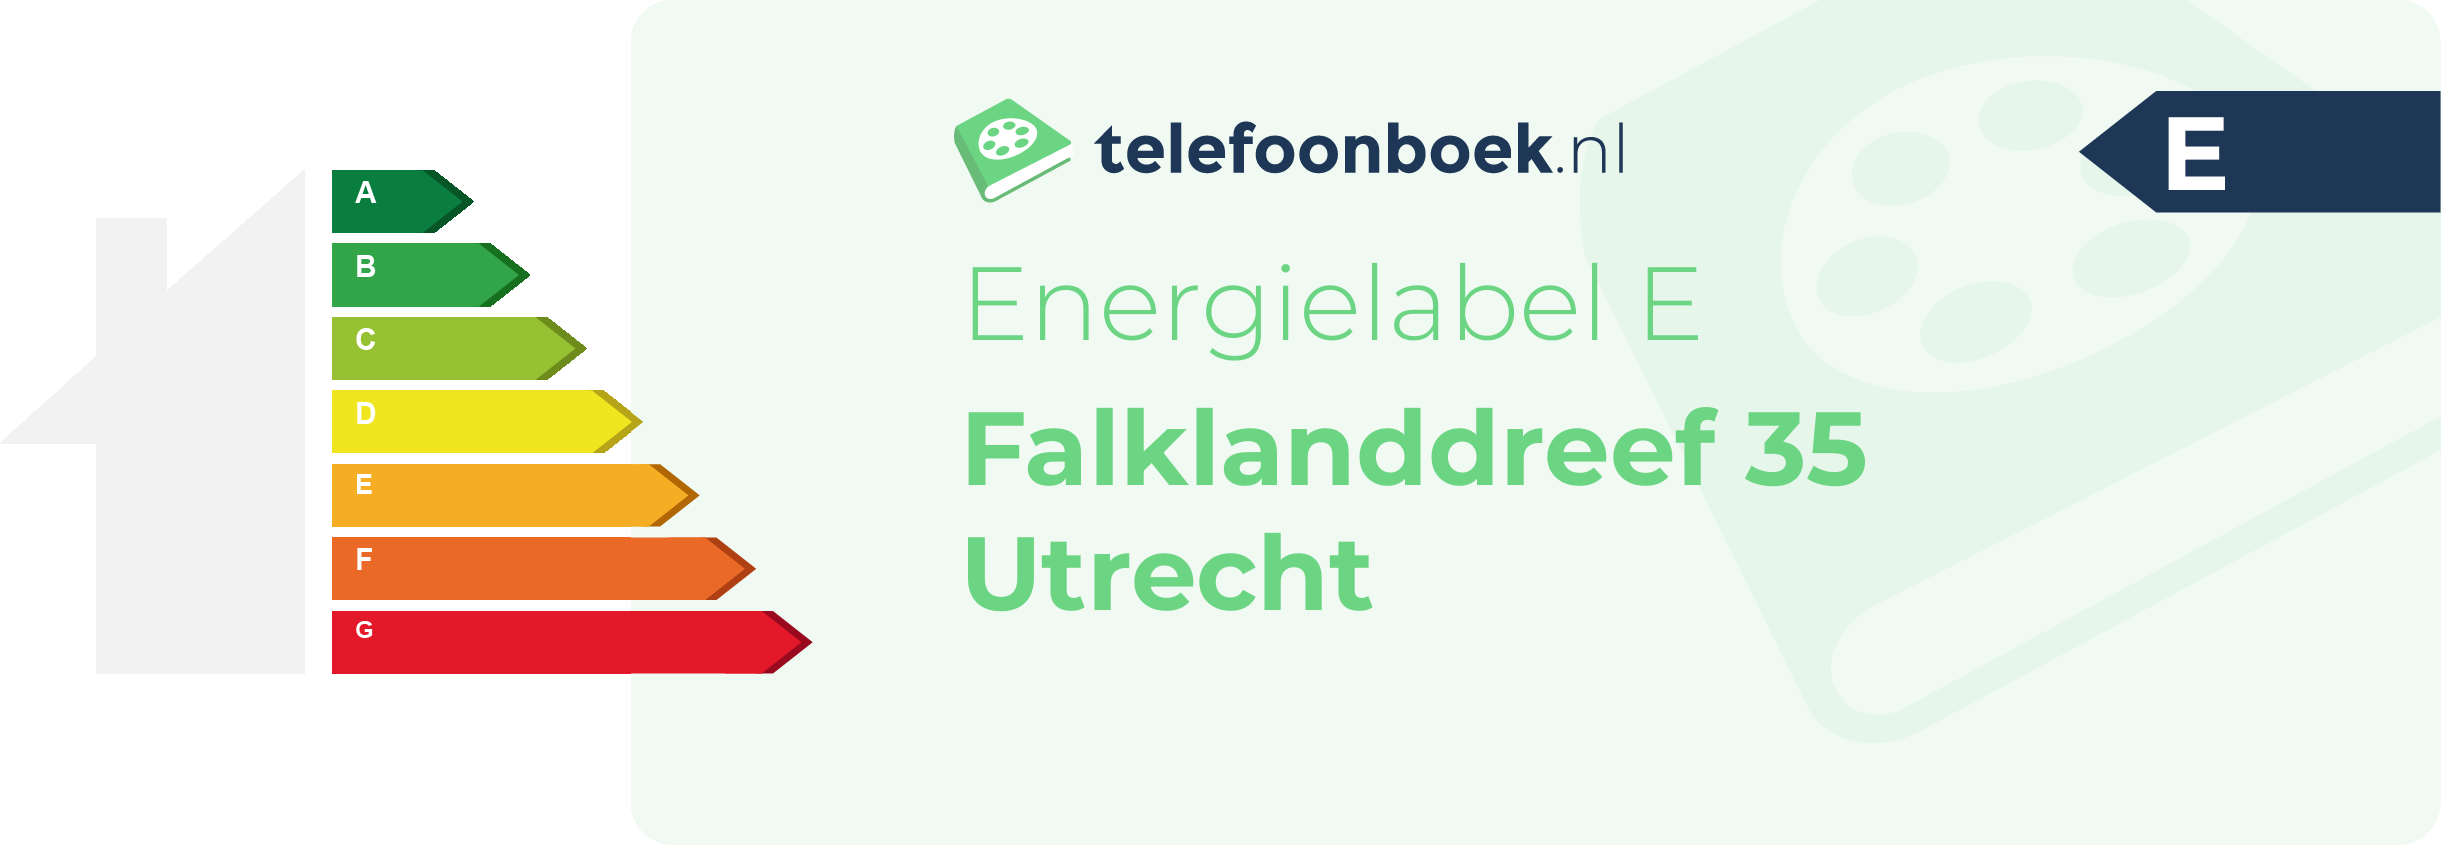 Energielabel Falklanddreef 35 Utrecht